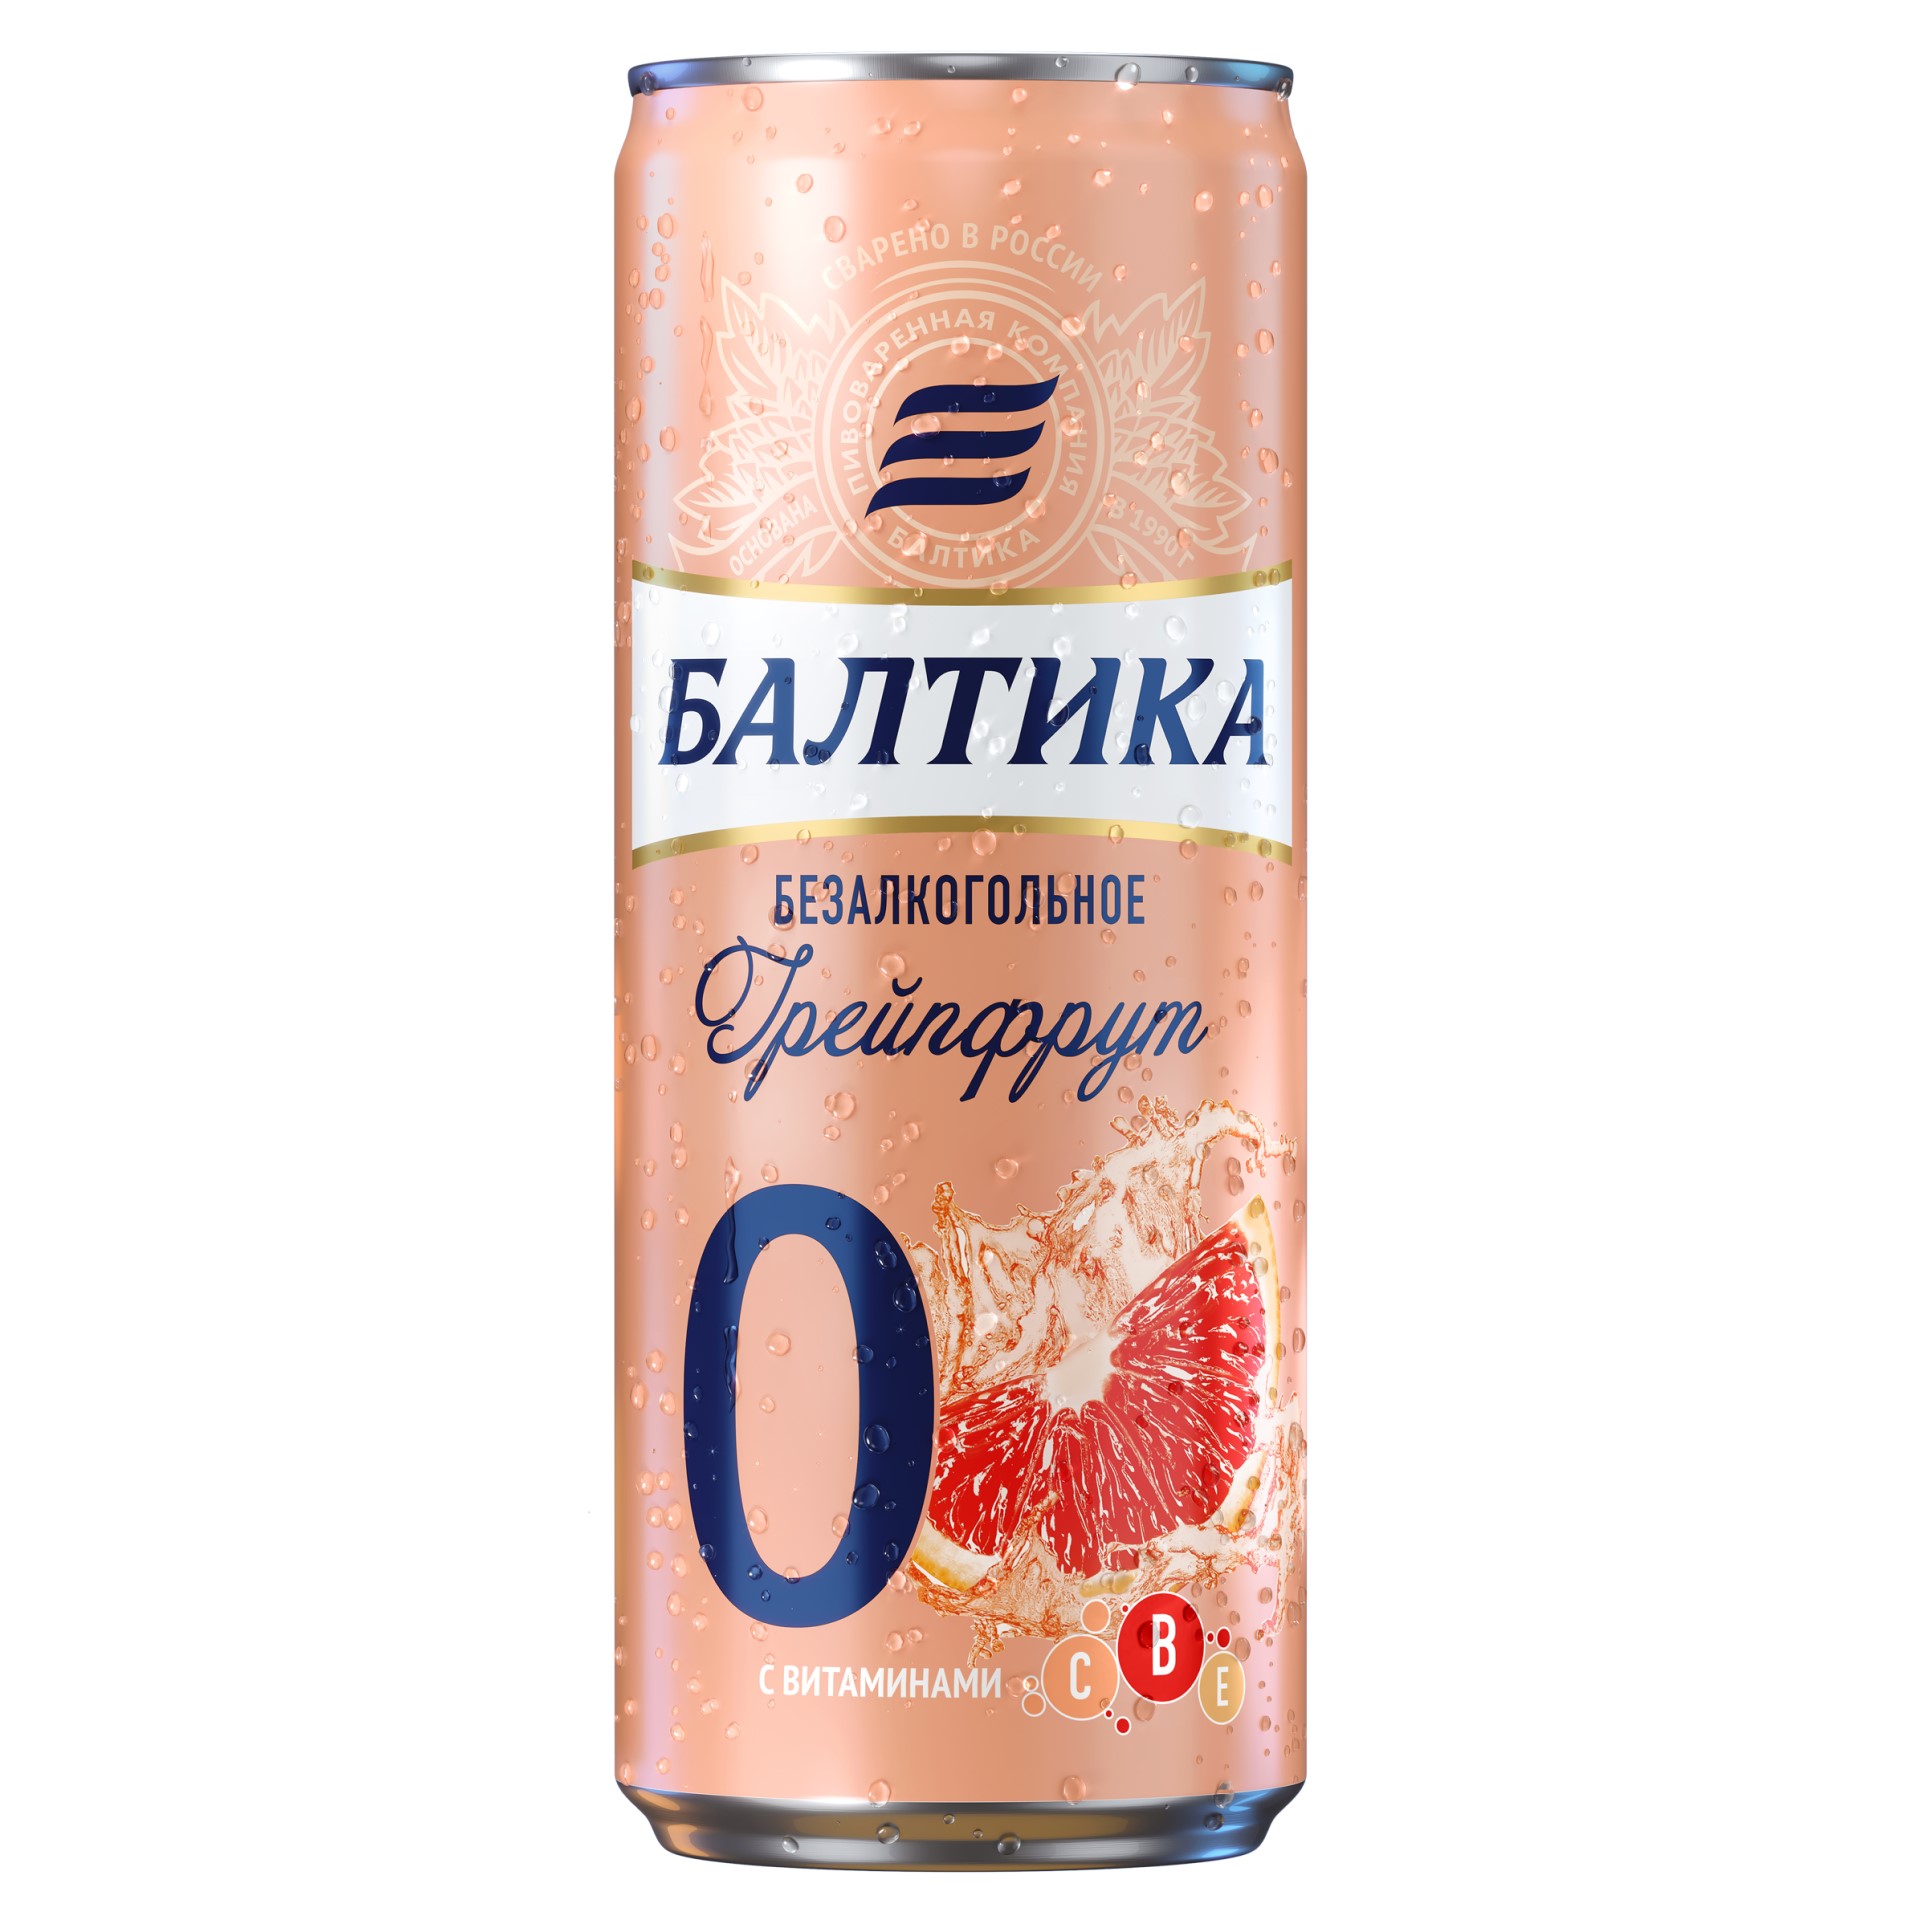 Балтика 0 сколько. Балтика 0 0,33. Балтика 0 грейпфрут. Пиво Балтика 0 грейпфрут. Пиво Балтика 0 безалкогольное.